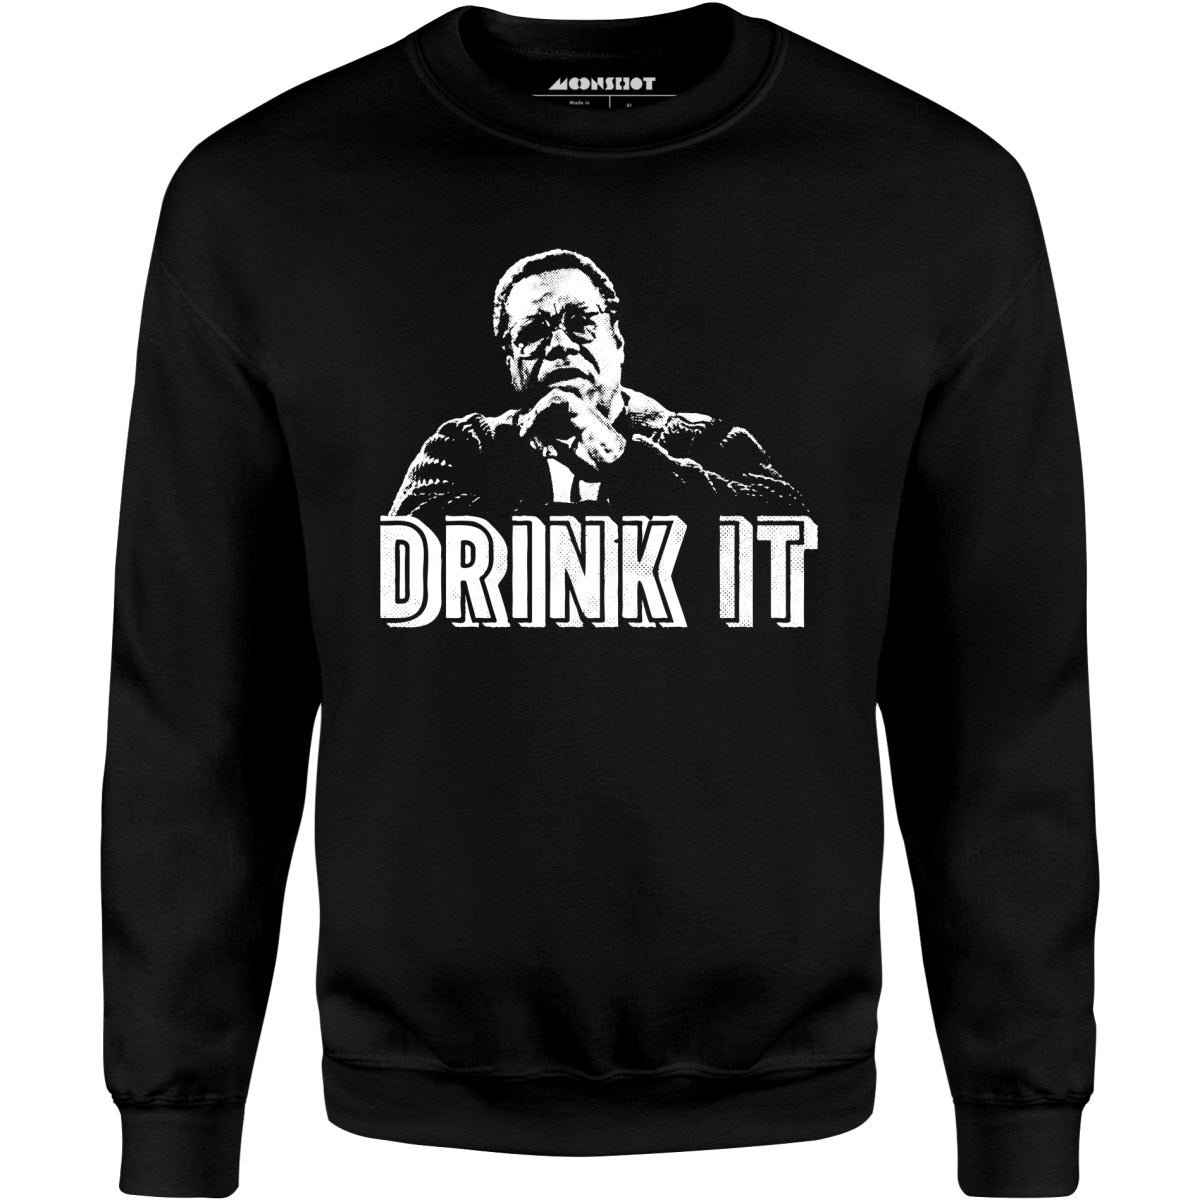 Drink It! - Unisex Sweatshirt